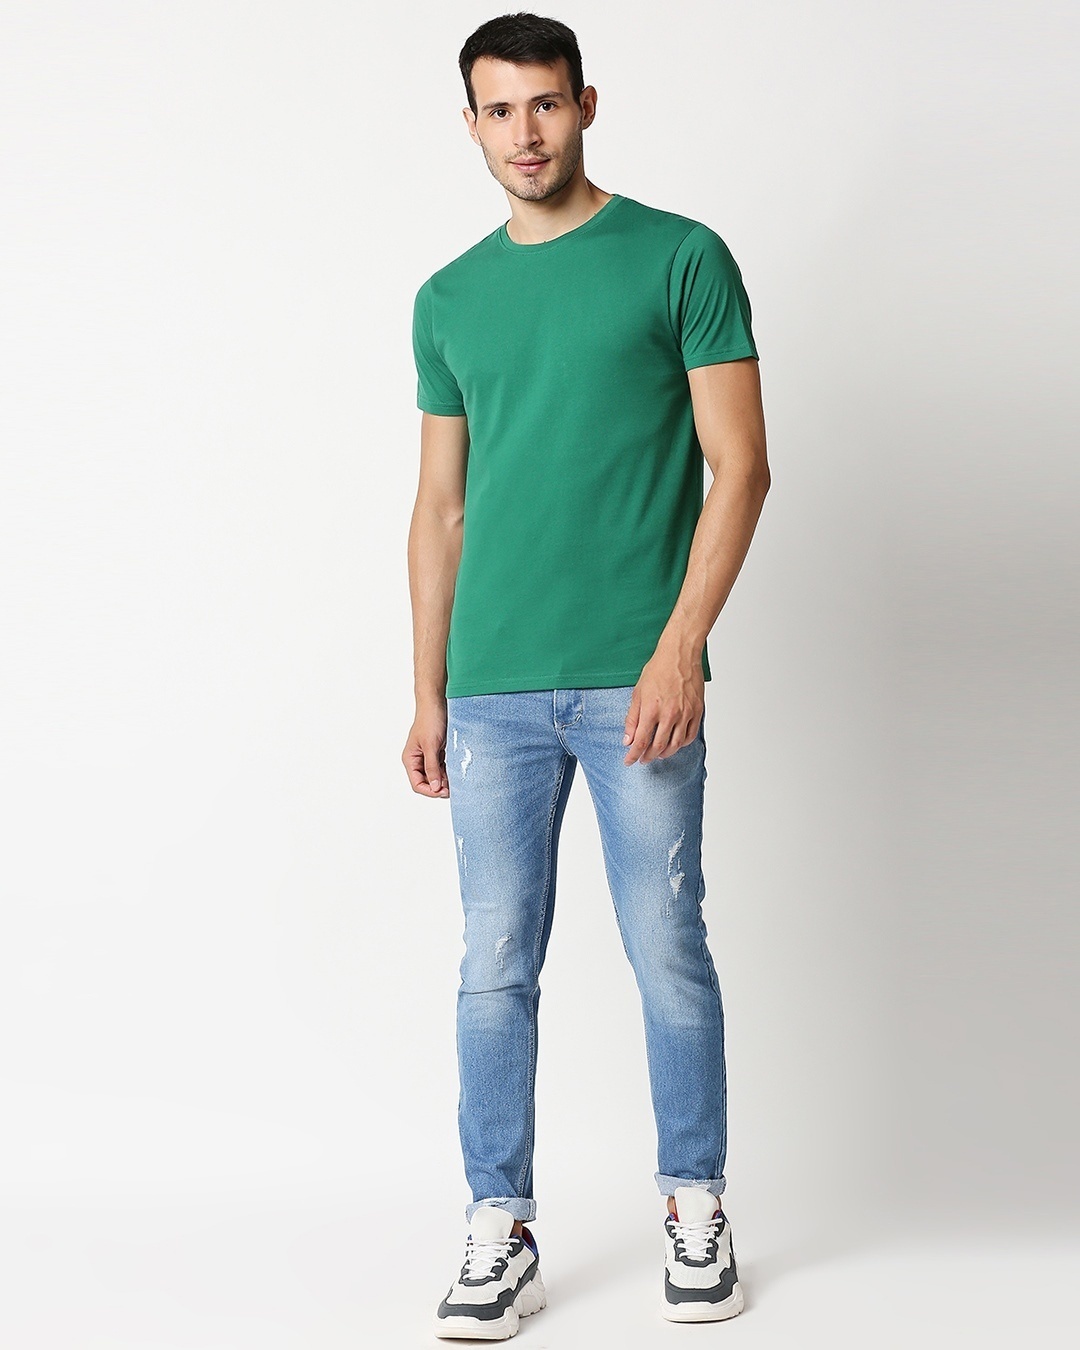 Shop Verdant Green Half Sleeve T-Shirt